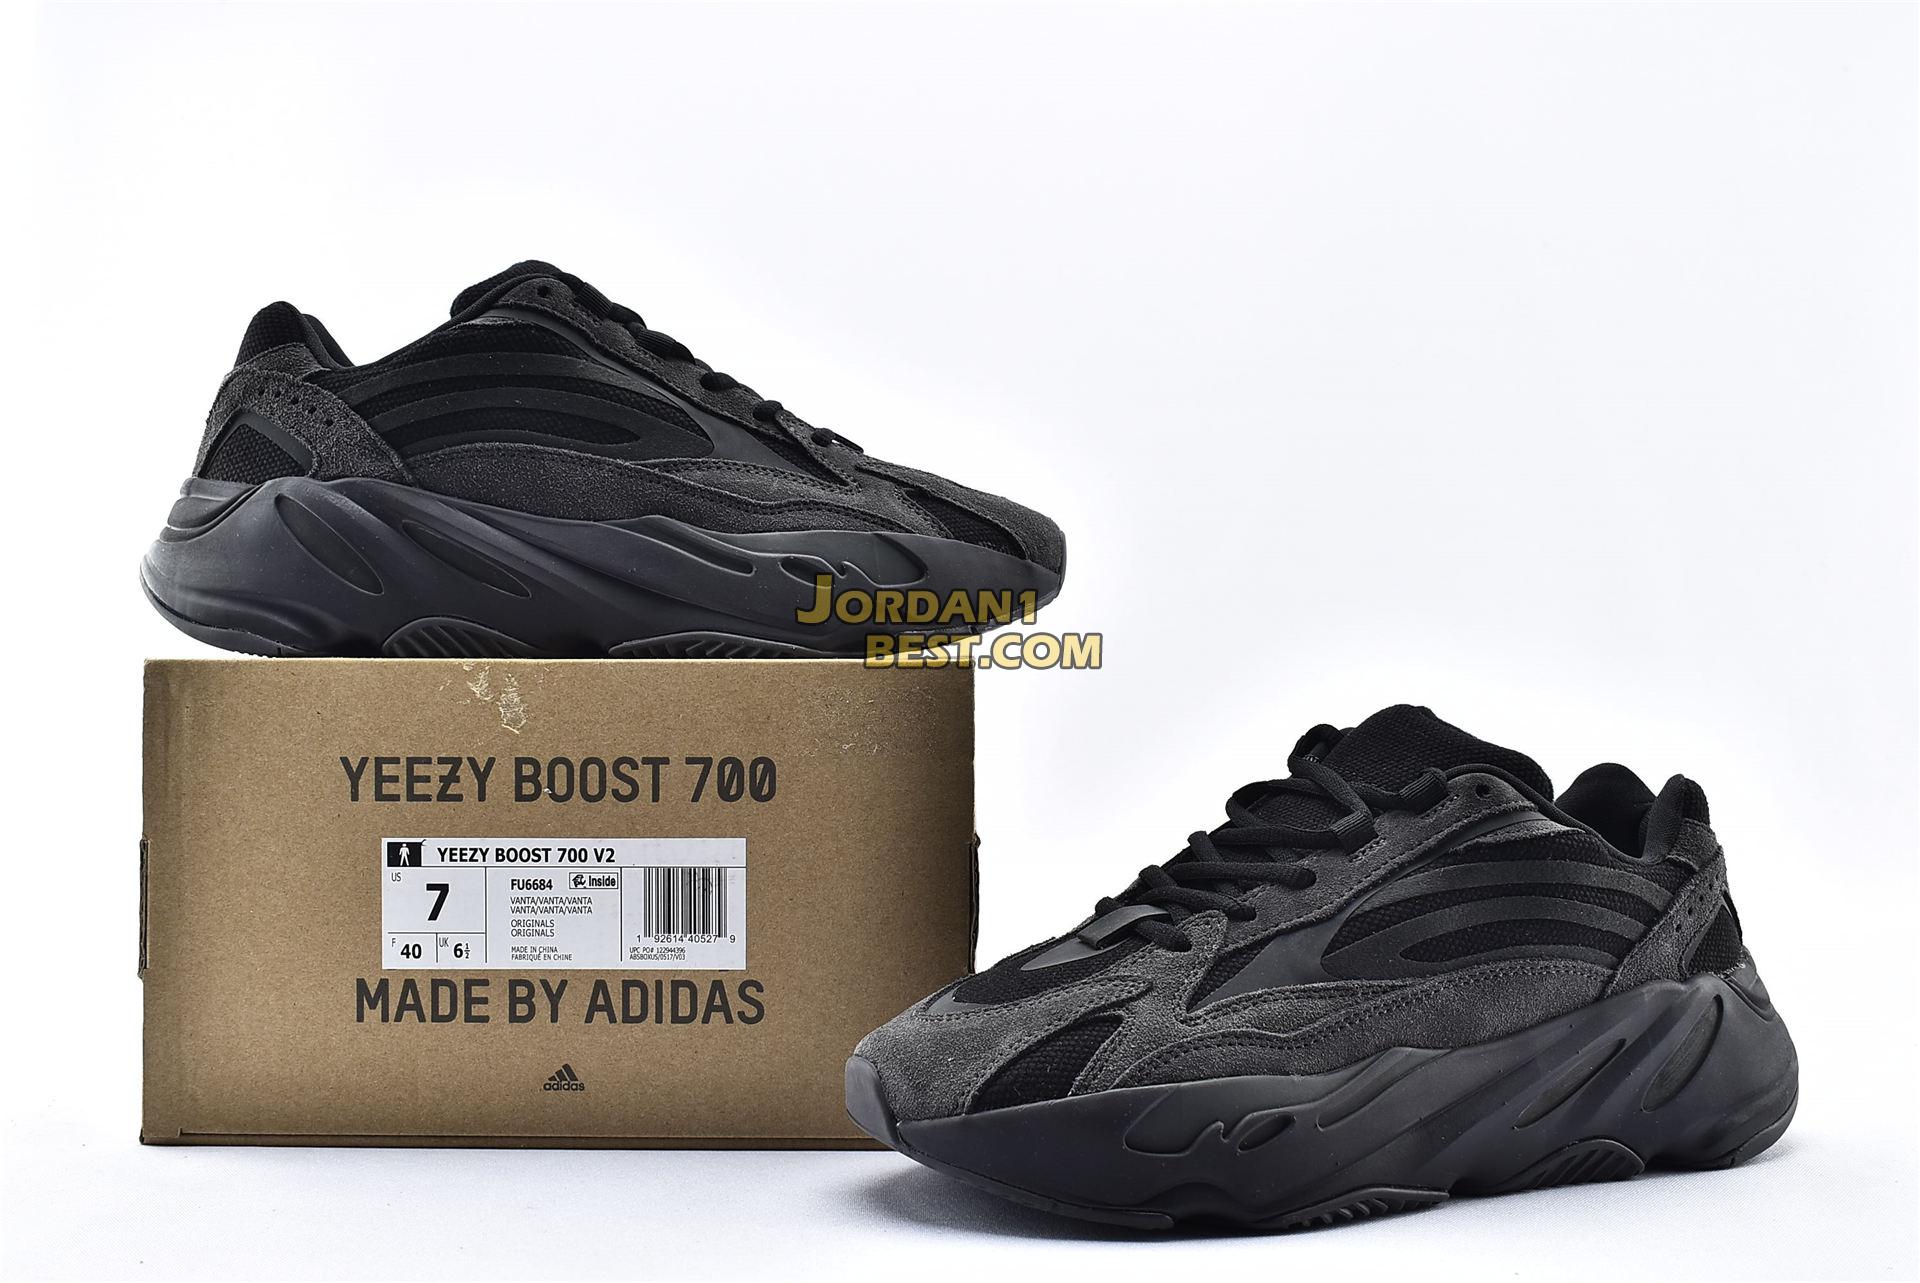 Adidas Yeezy Boost 700 V2 "Vanta" FU6684